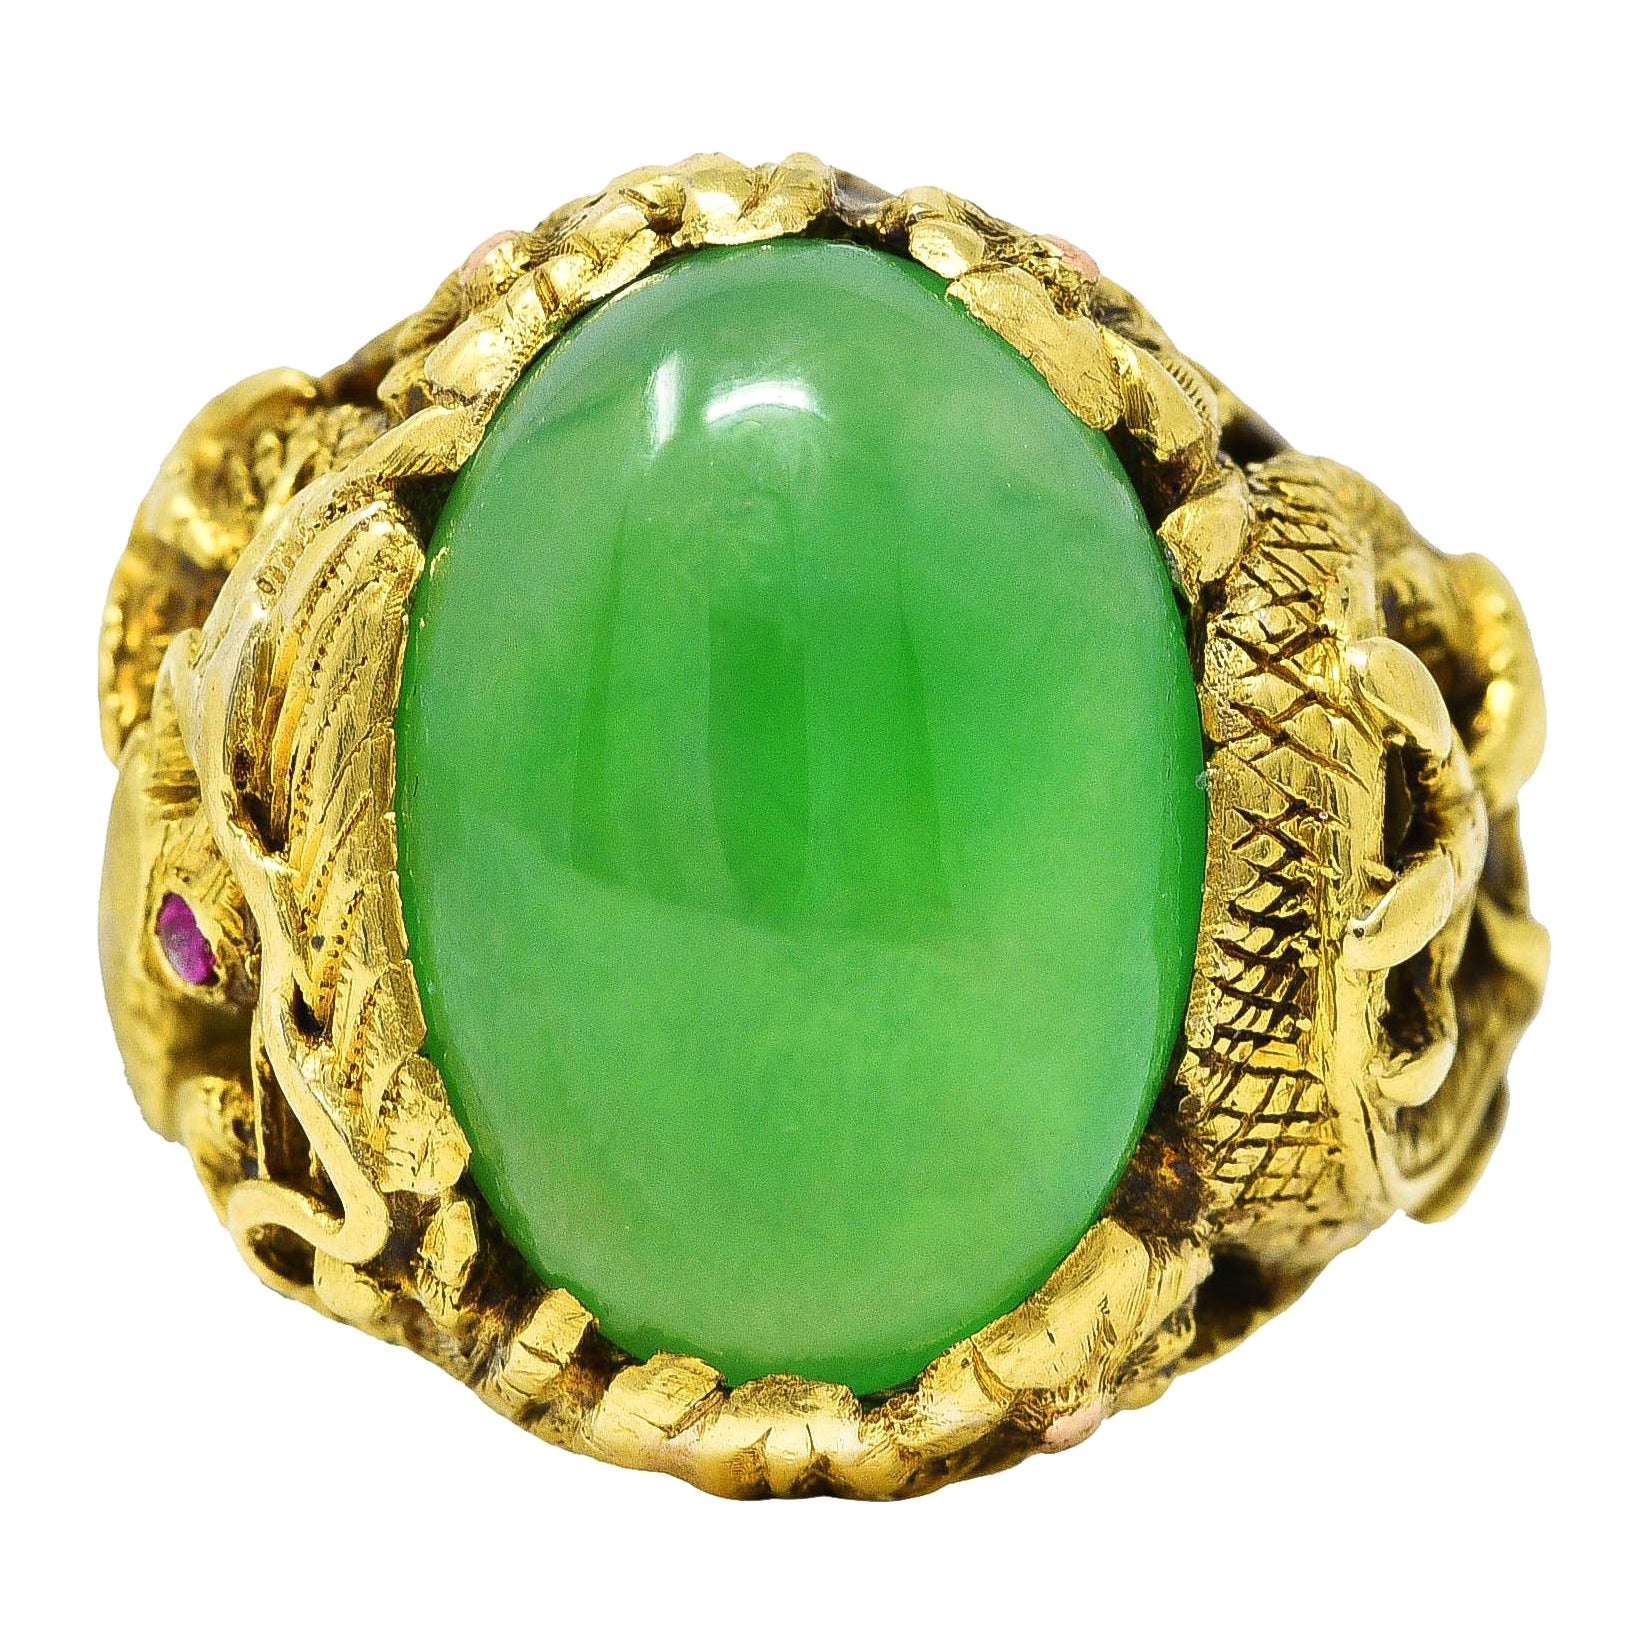 Art Nouveau Jadeite Jade Ruby 18 Karat Yellow Gold Dragon Antique Ring GIA